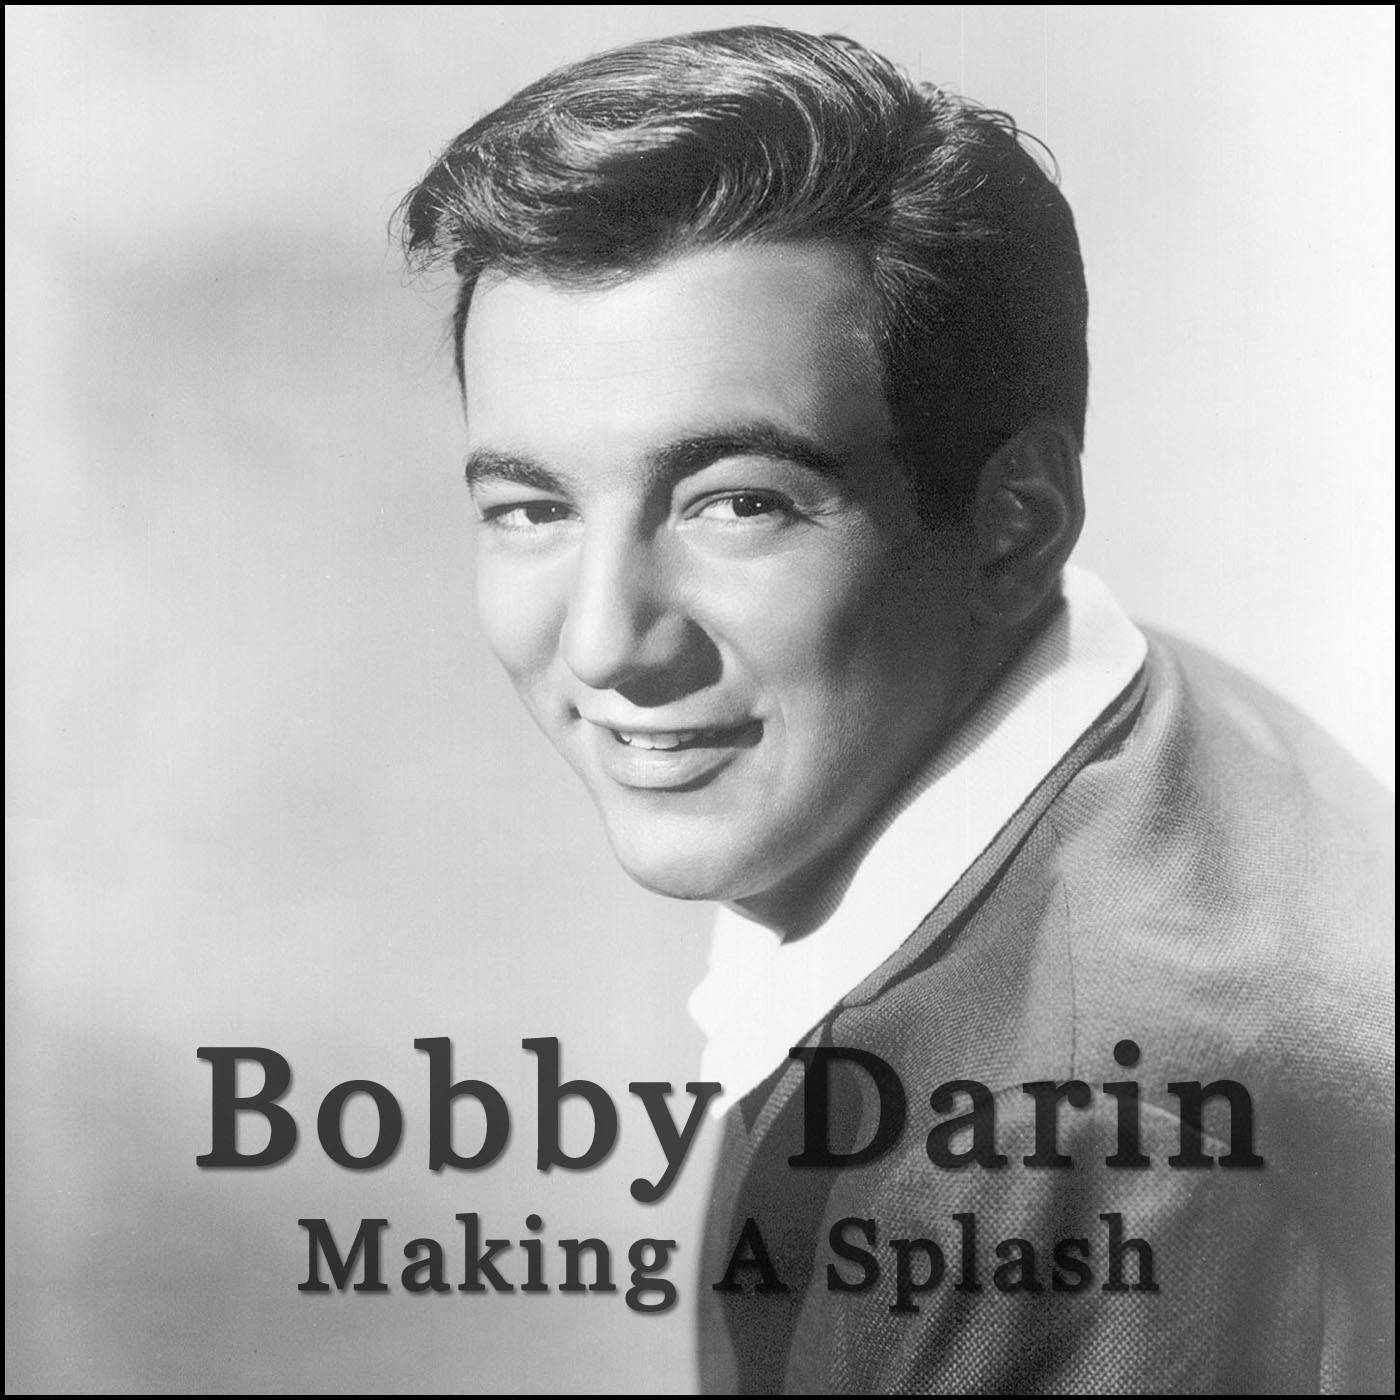 American Singer Bobby Darin Poster Wallpaper